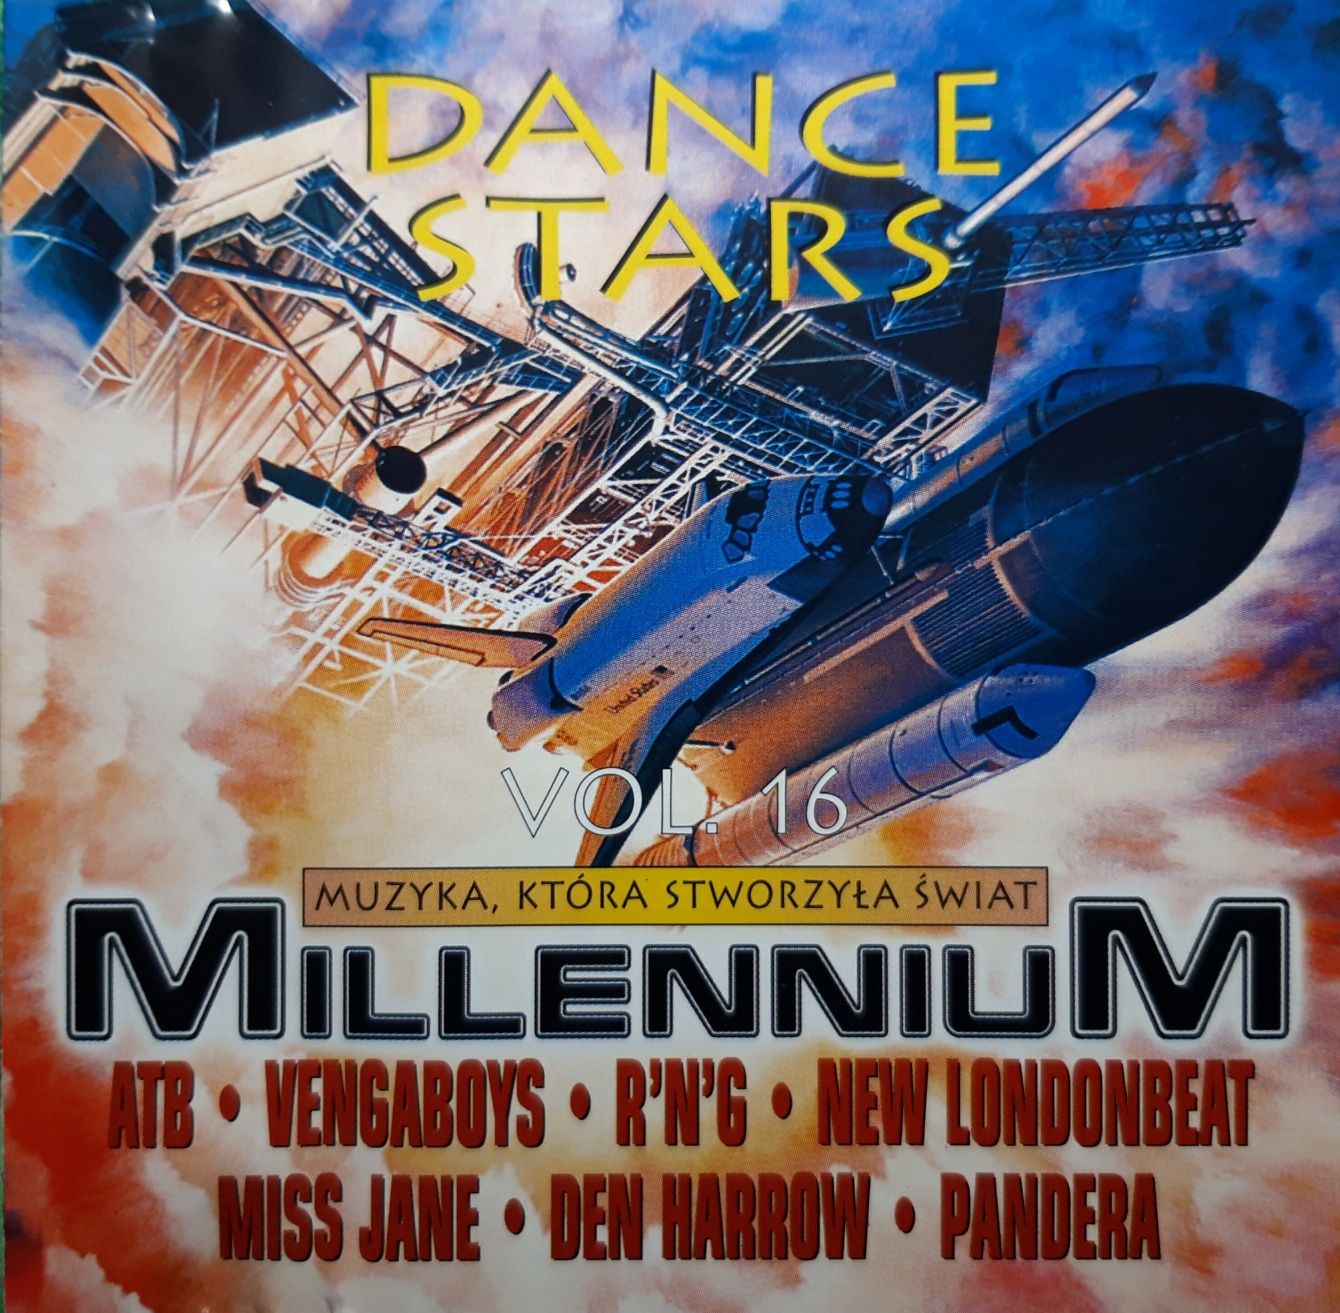 Millennium Vol. 16 - Dance Stars (CD, 1999)